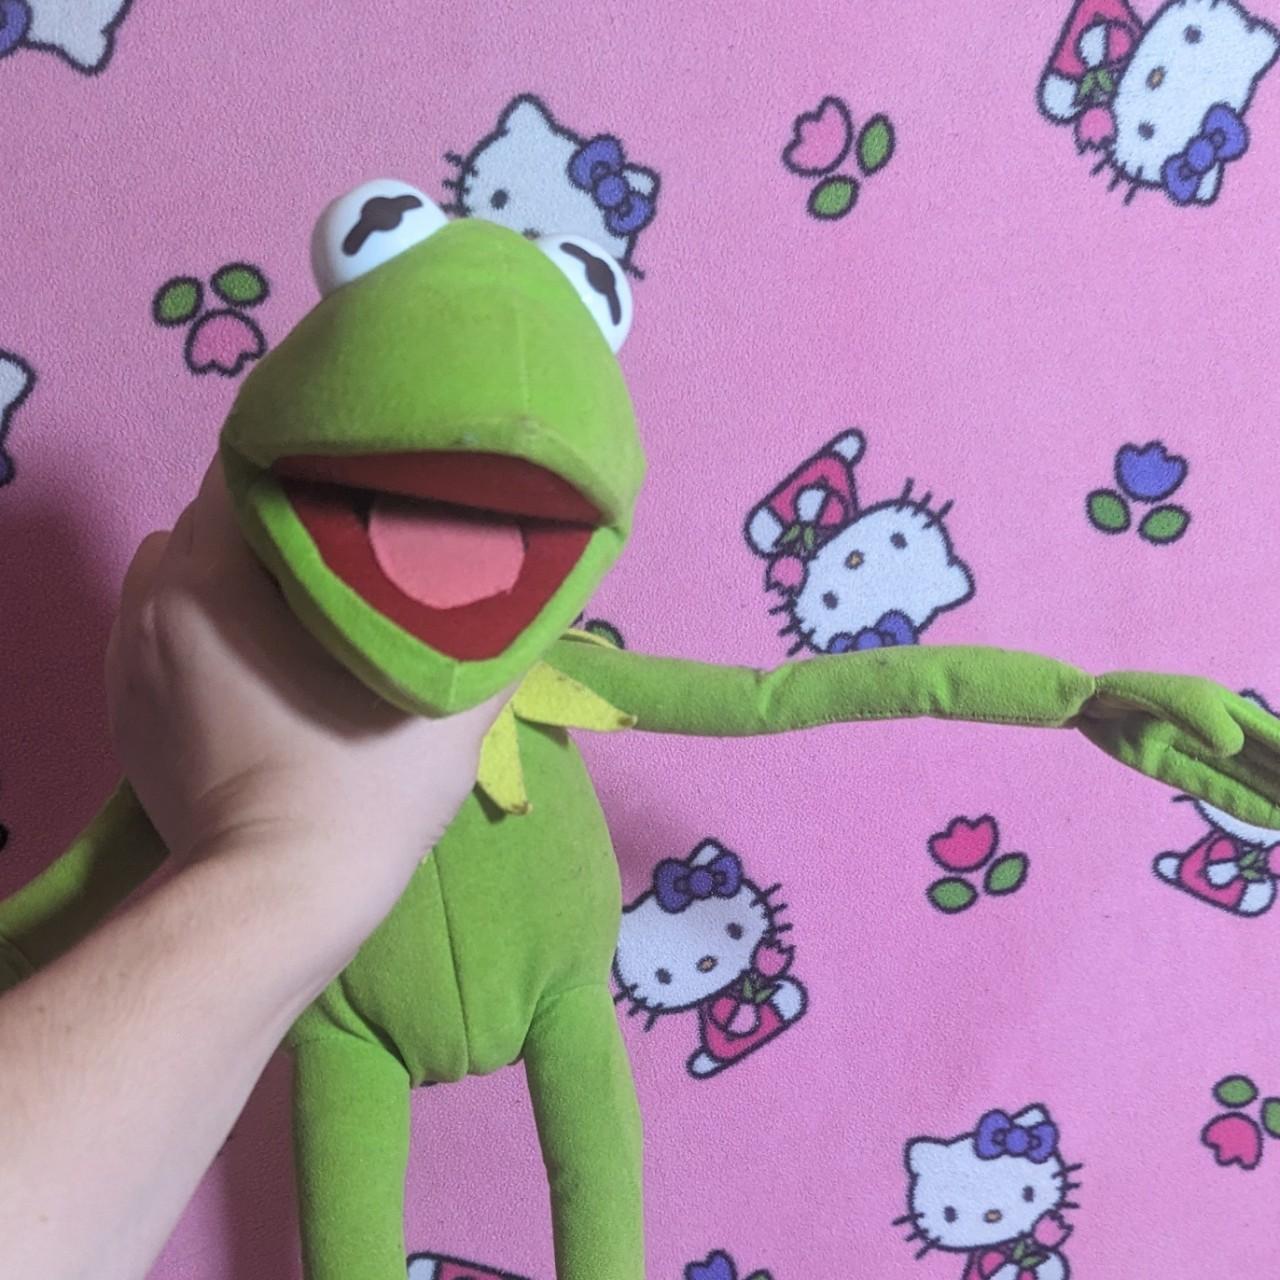 18 Kermit The Frog Poseable Plush Toy 🐸 amazing